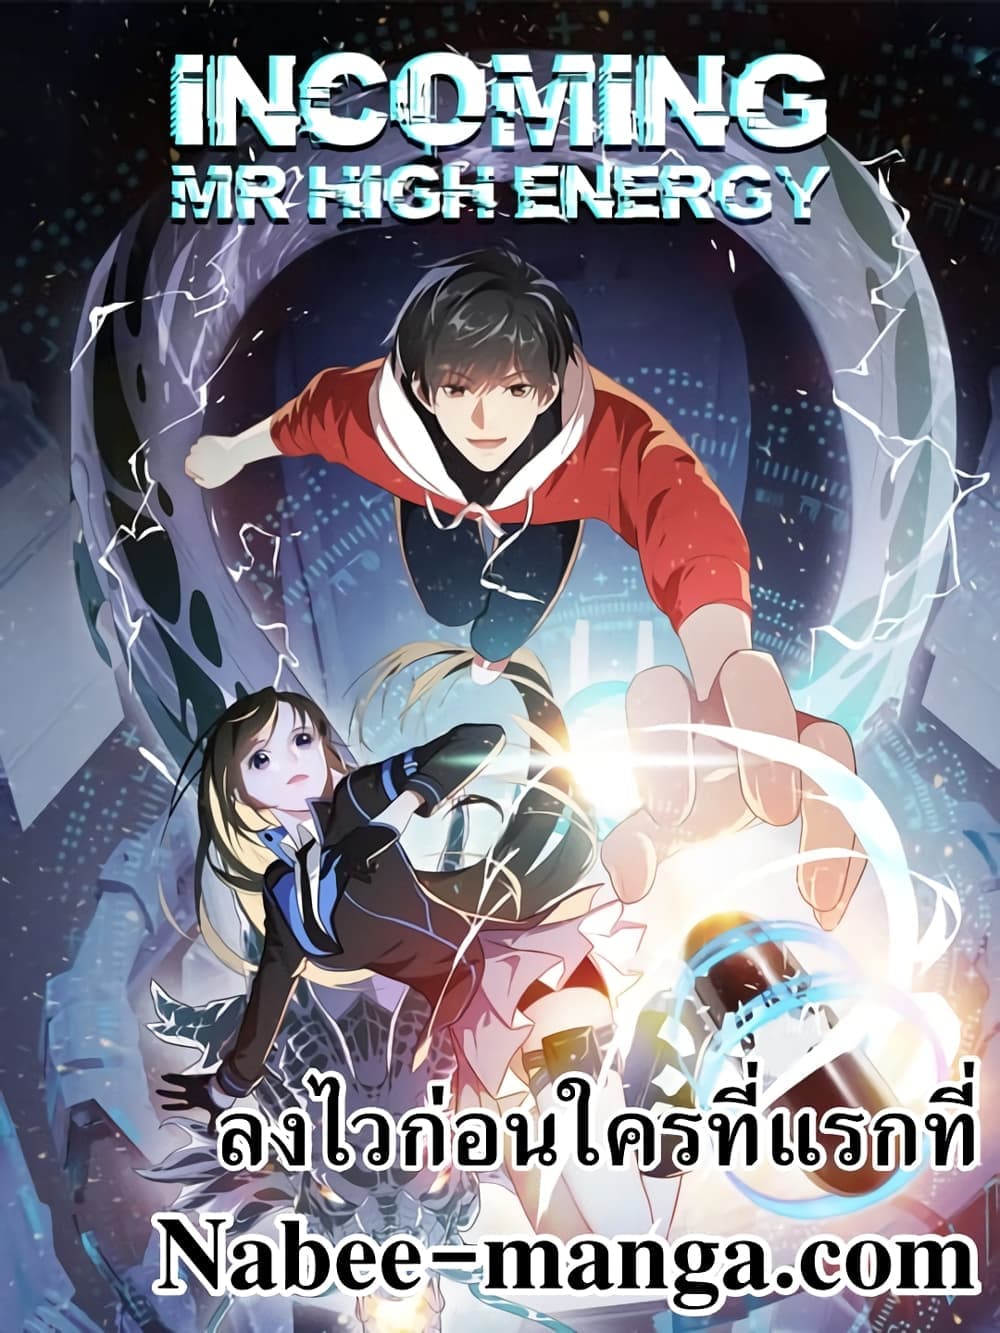 High Energy Strikes à¸à¸­à¸à¸à¸µà¹ 241 (1)